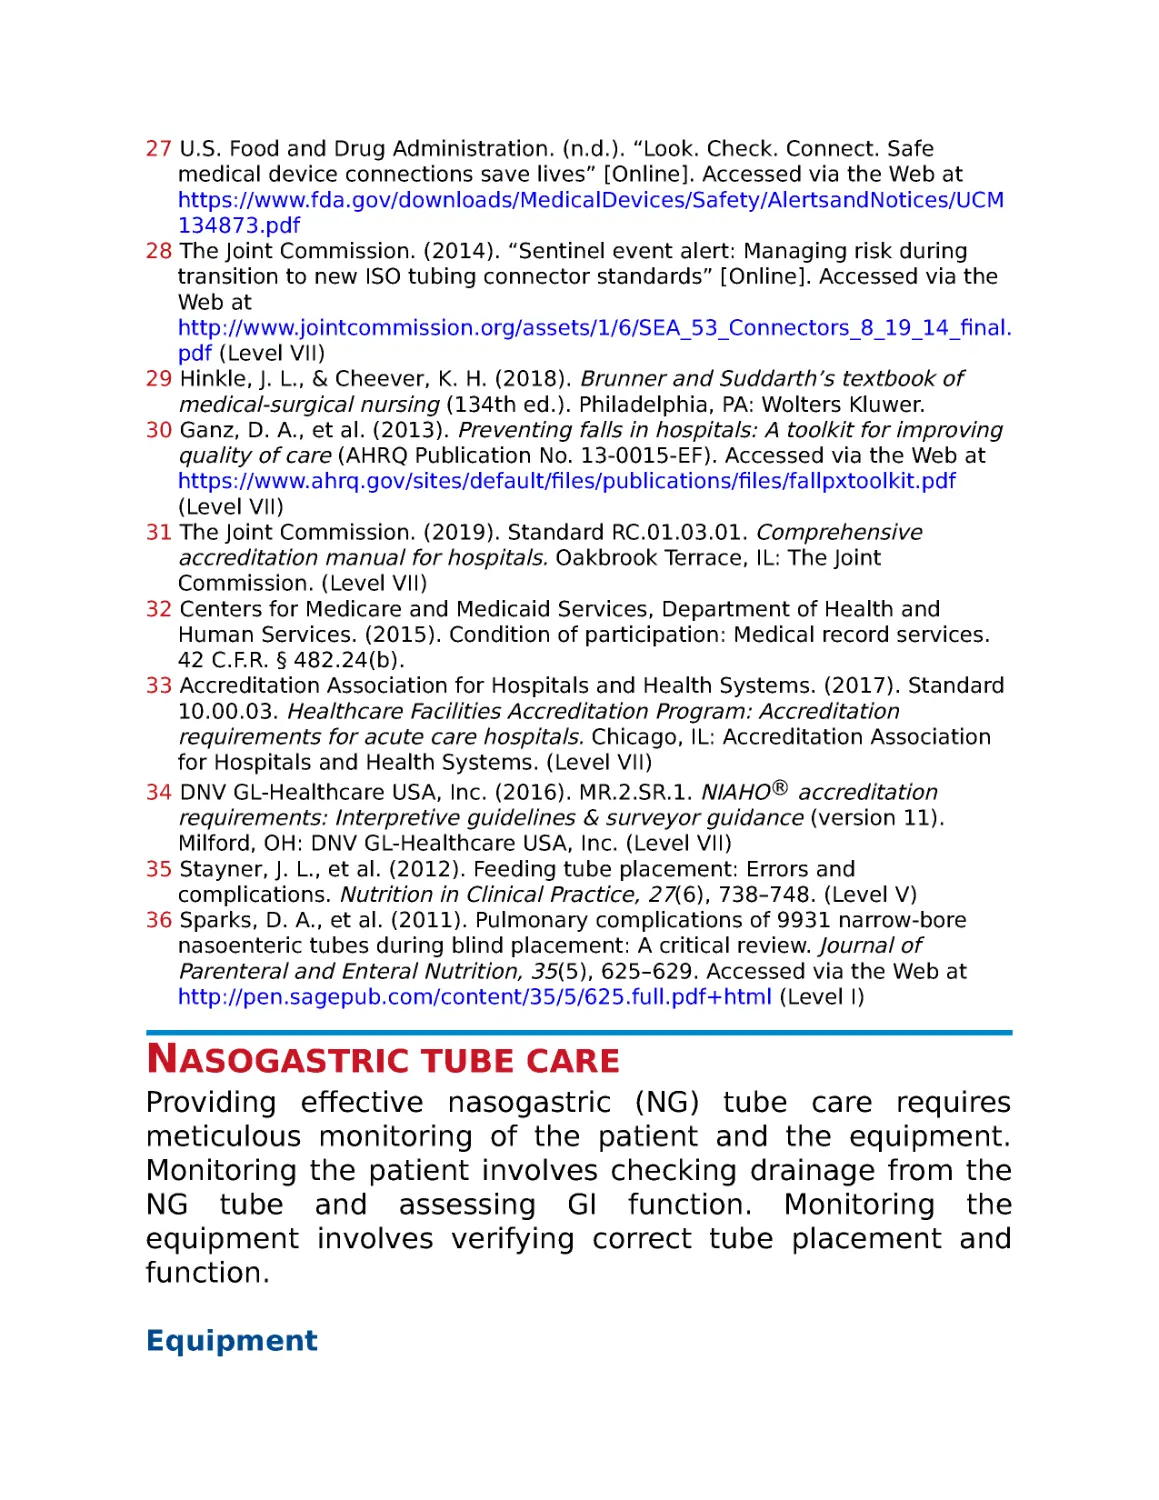 Nasogastric tube care